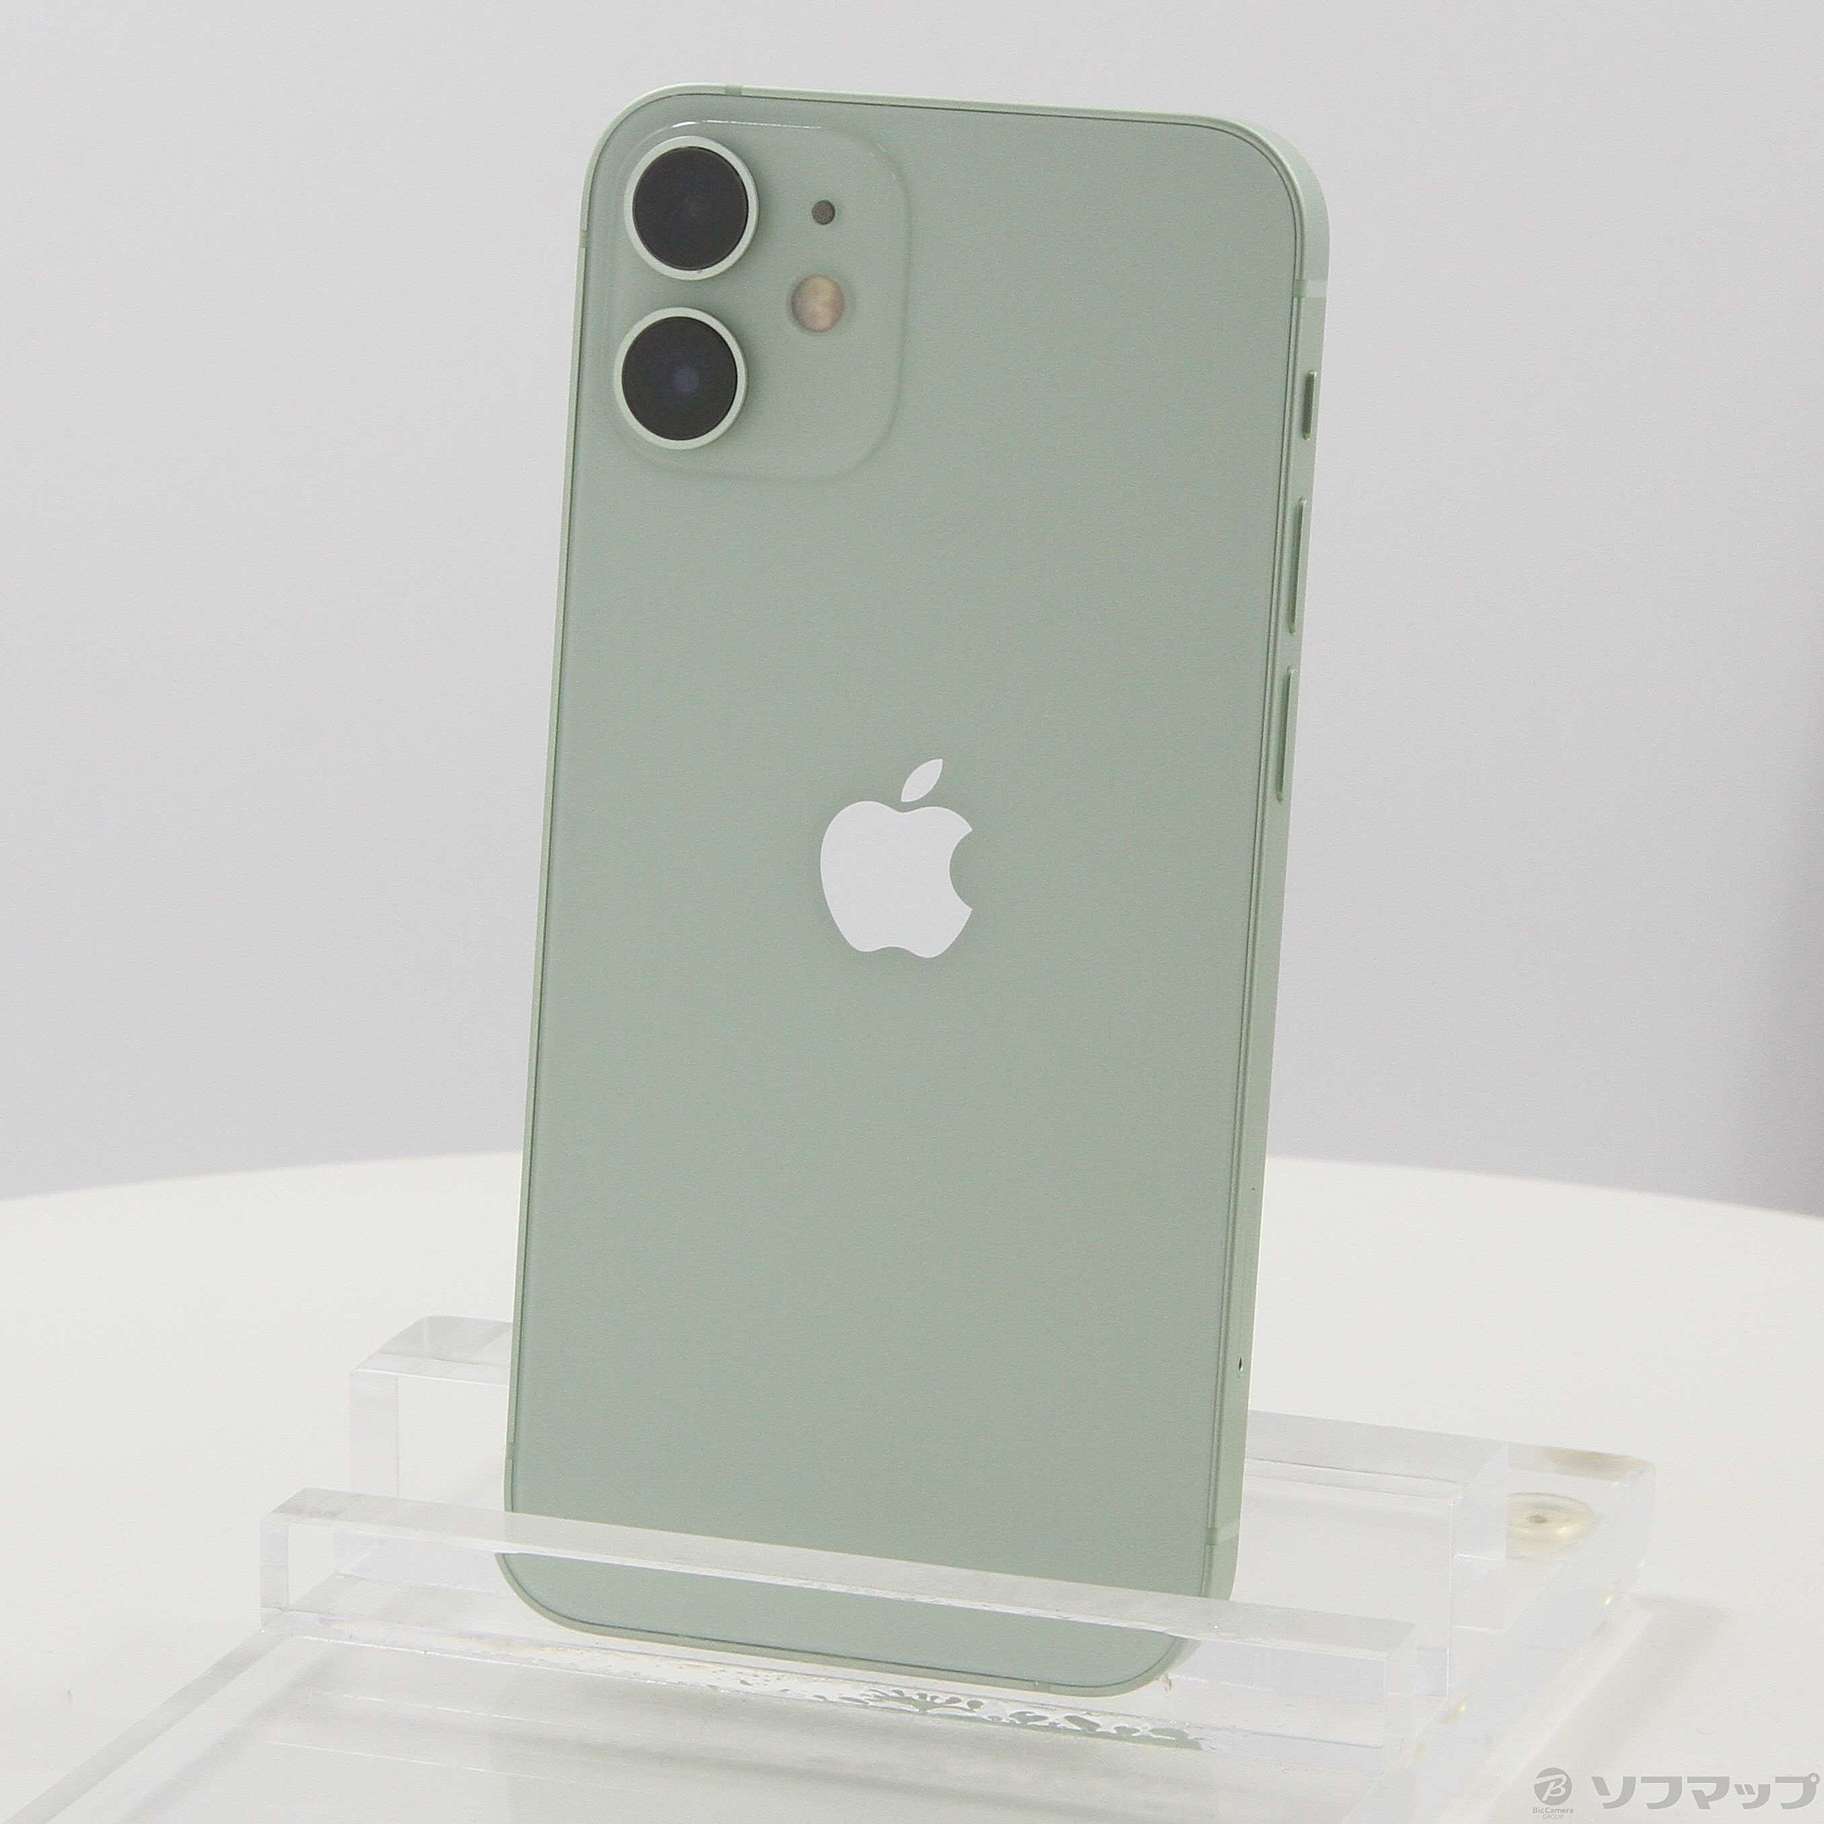 iPhone12 mini 128GB green 緑 新品 SIMフリー